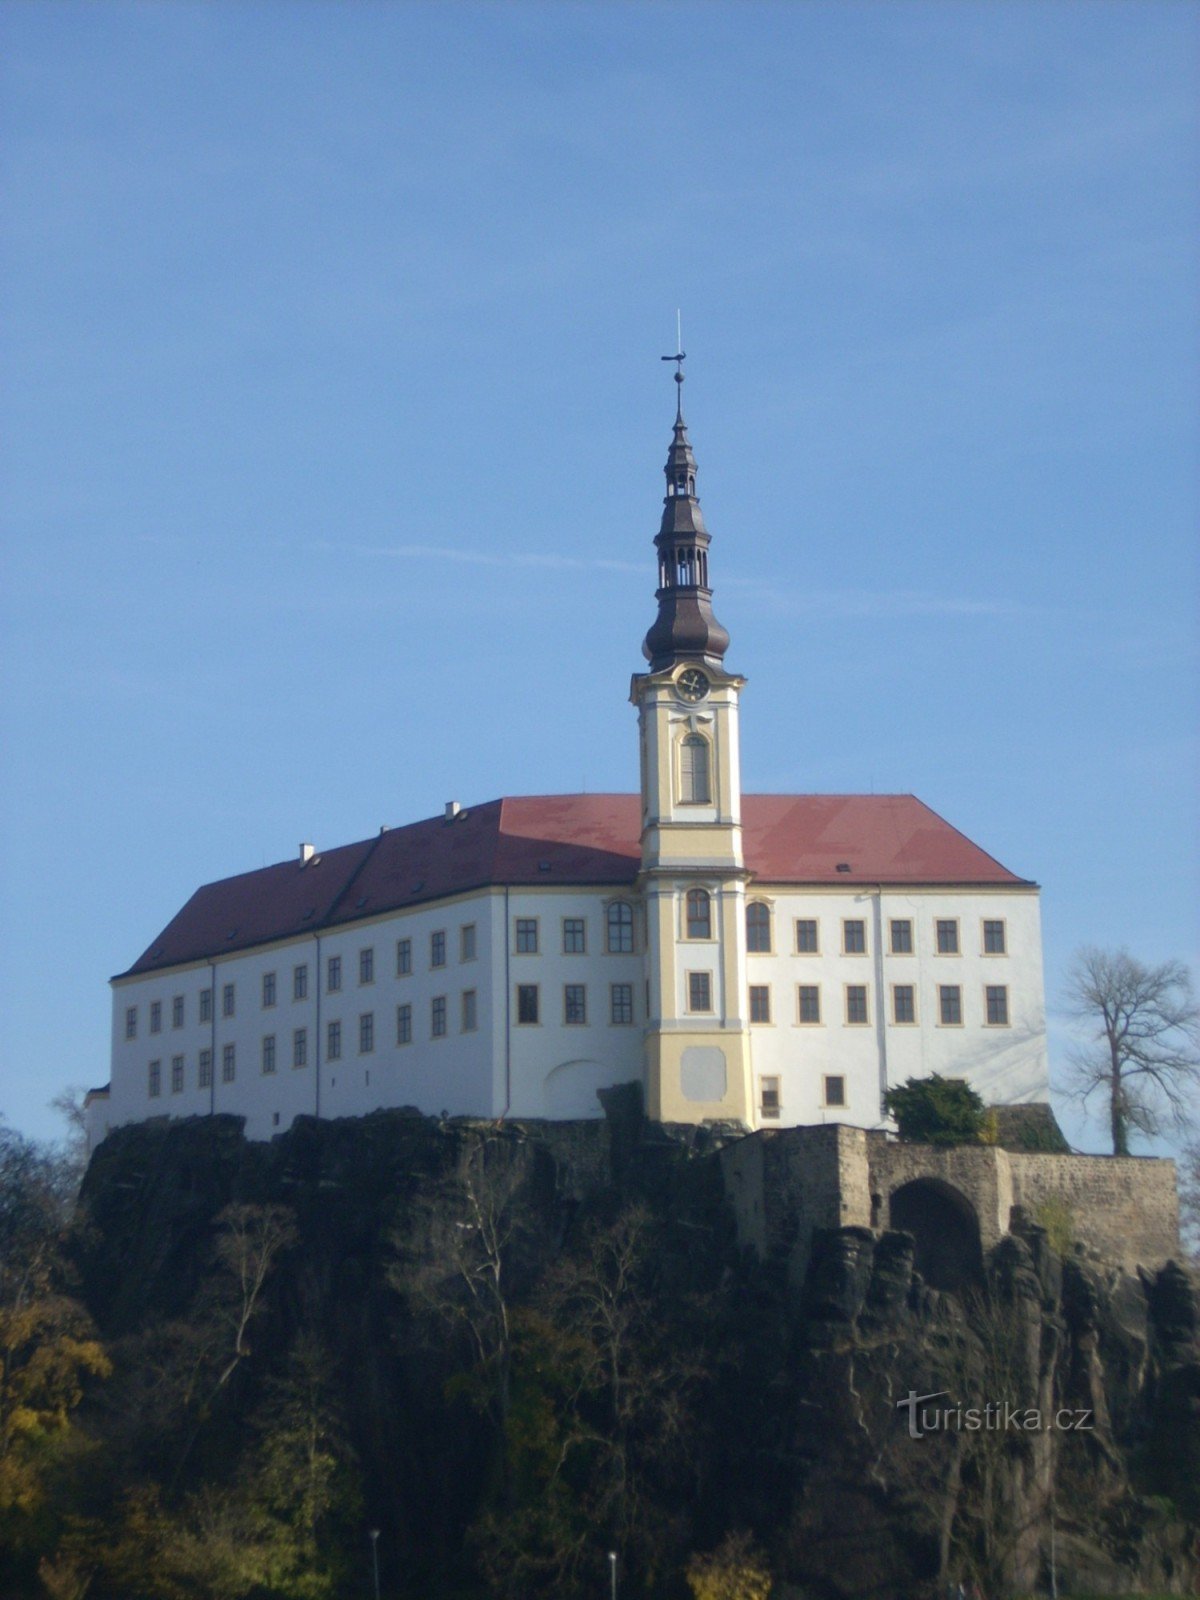 Vista do castelo de Děčín da muralha do pastor